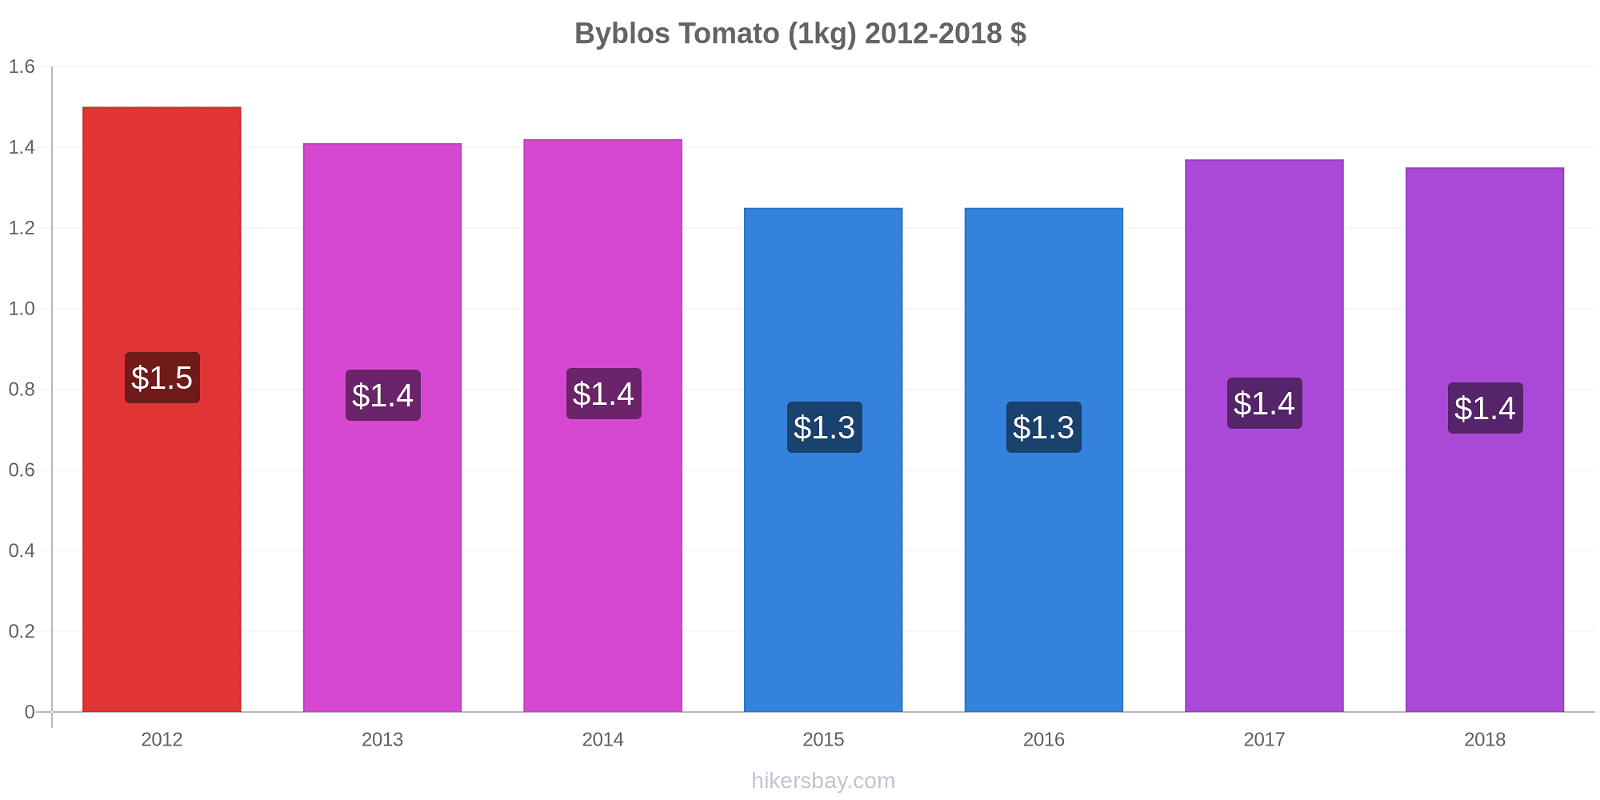 Byblos price changes Tomato (1kg) hikersbay.com